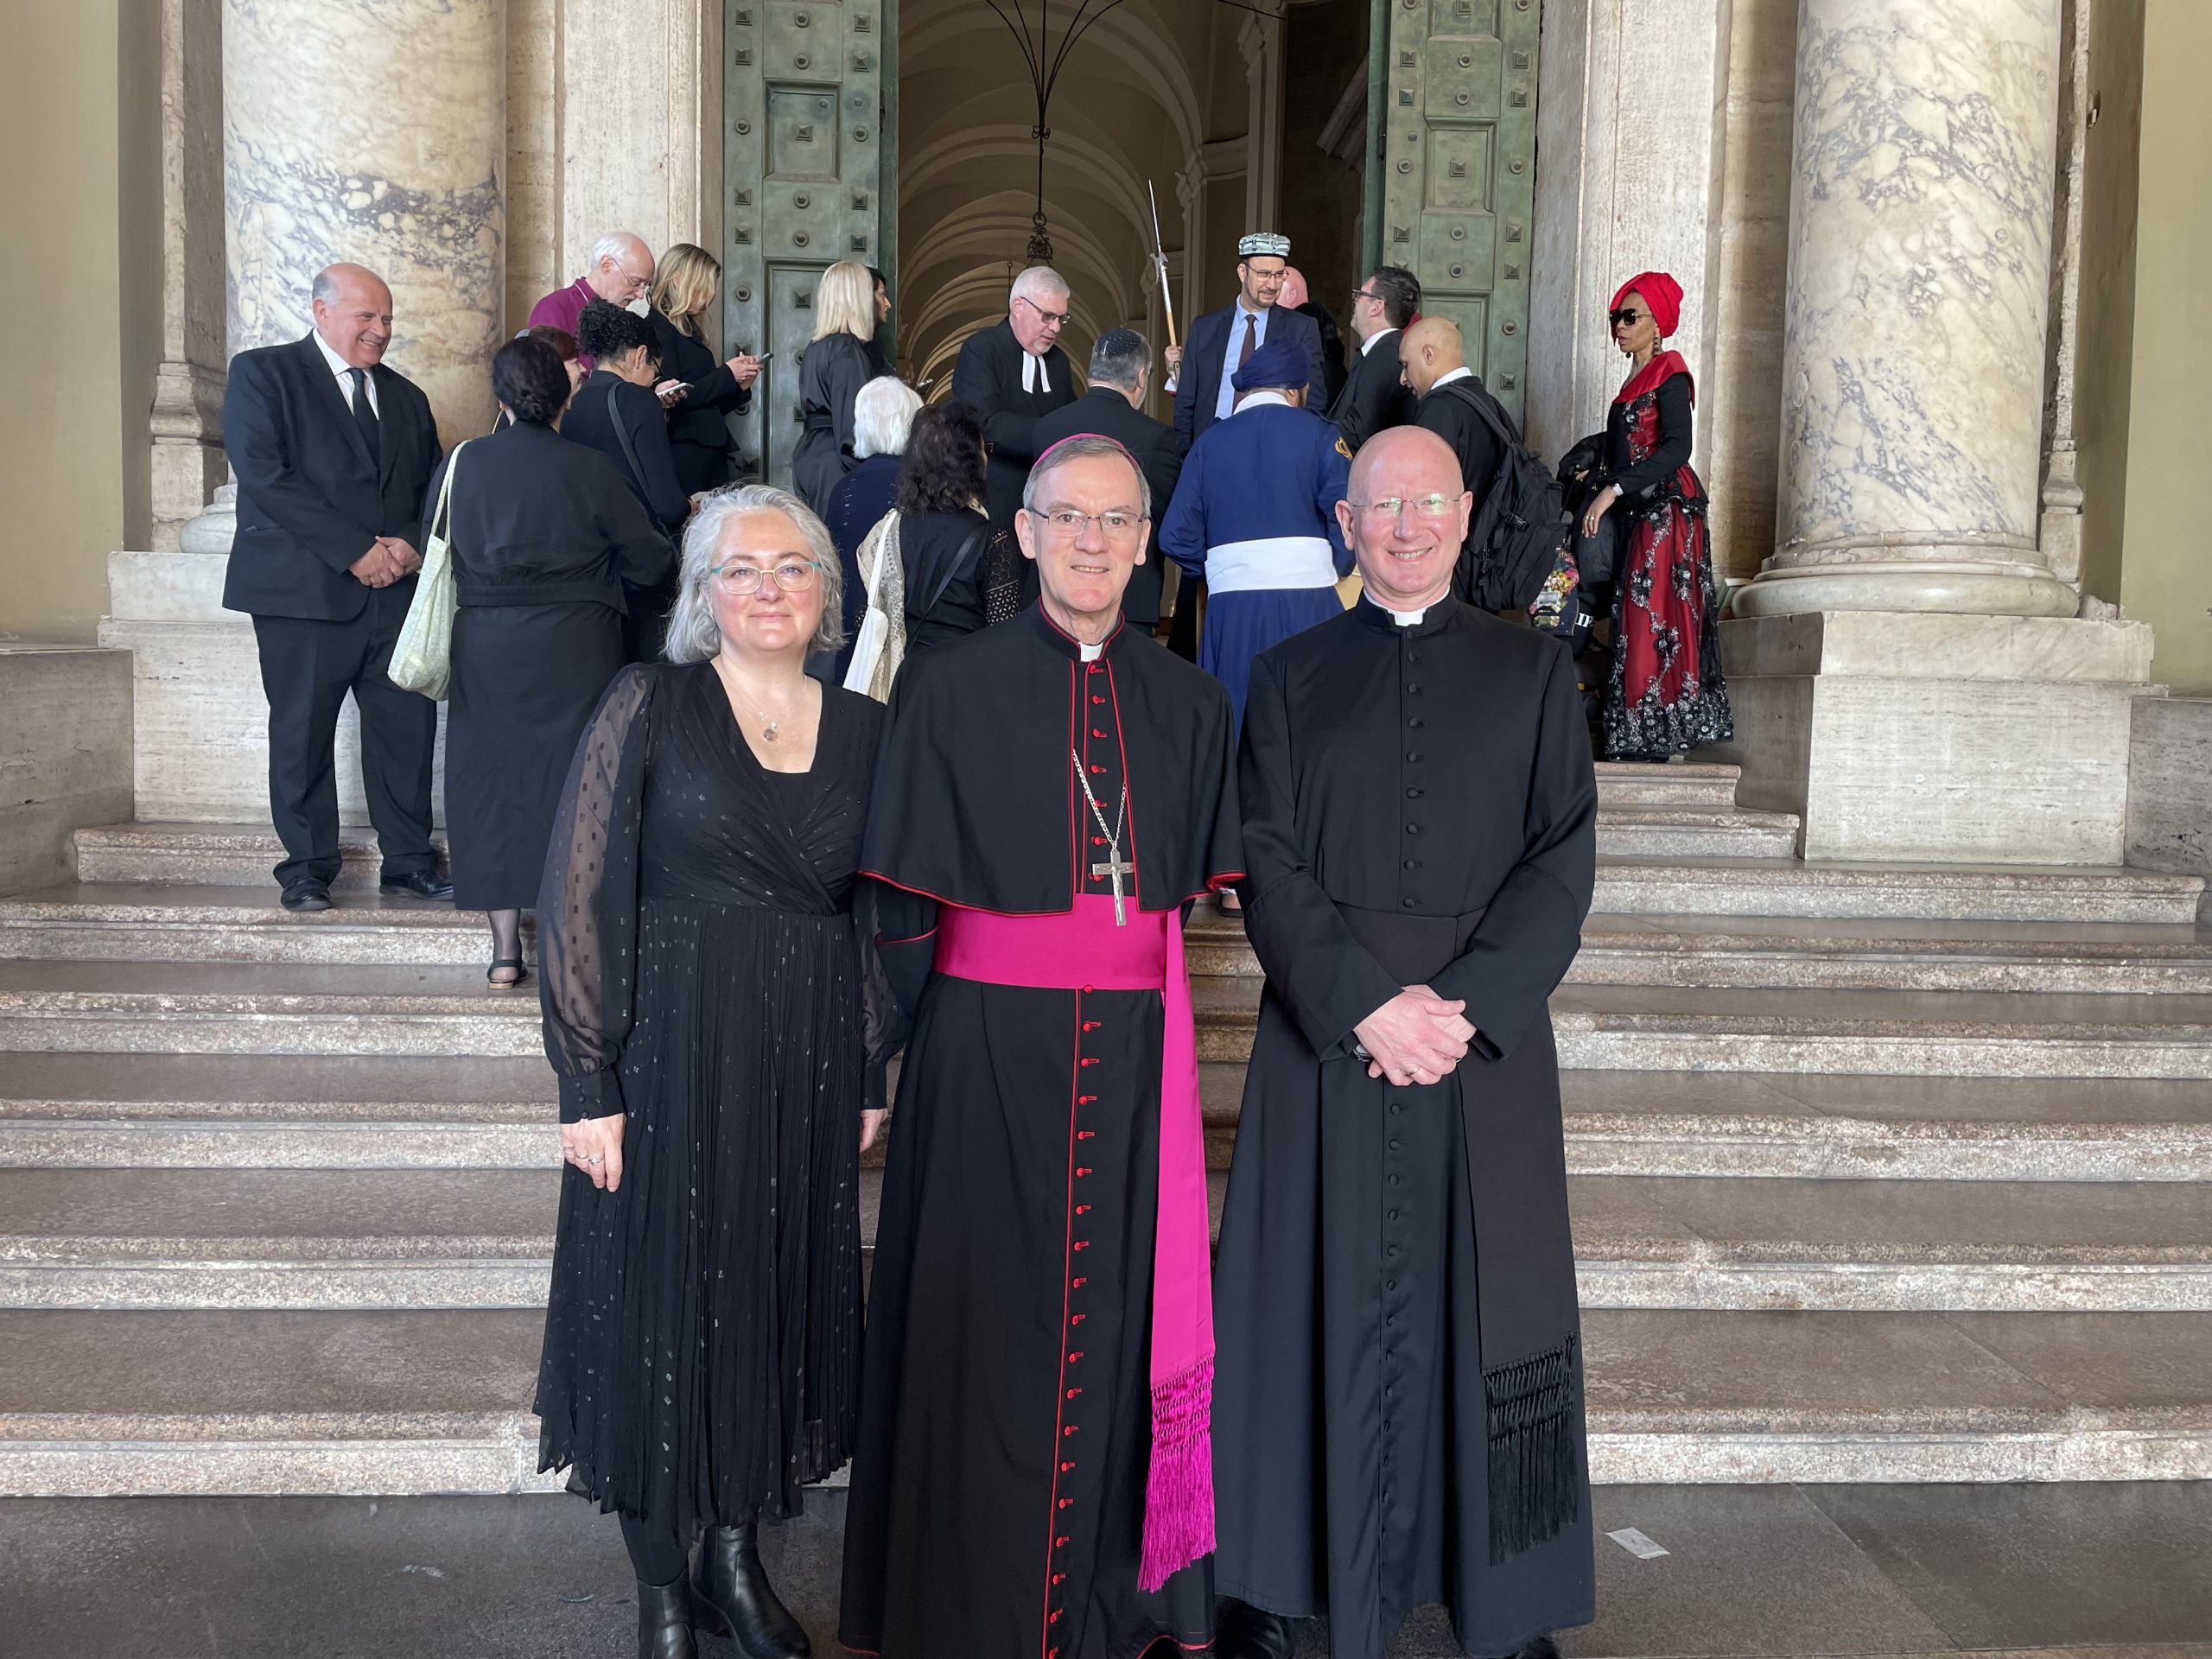 Dr Emma Gardner, Bishop John Arnold, and Canon Michael Jones gather at The Vatican